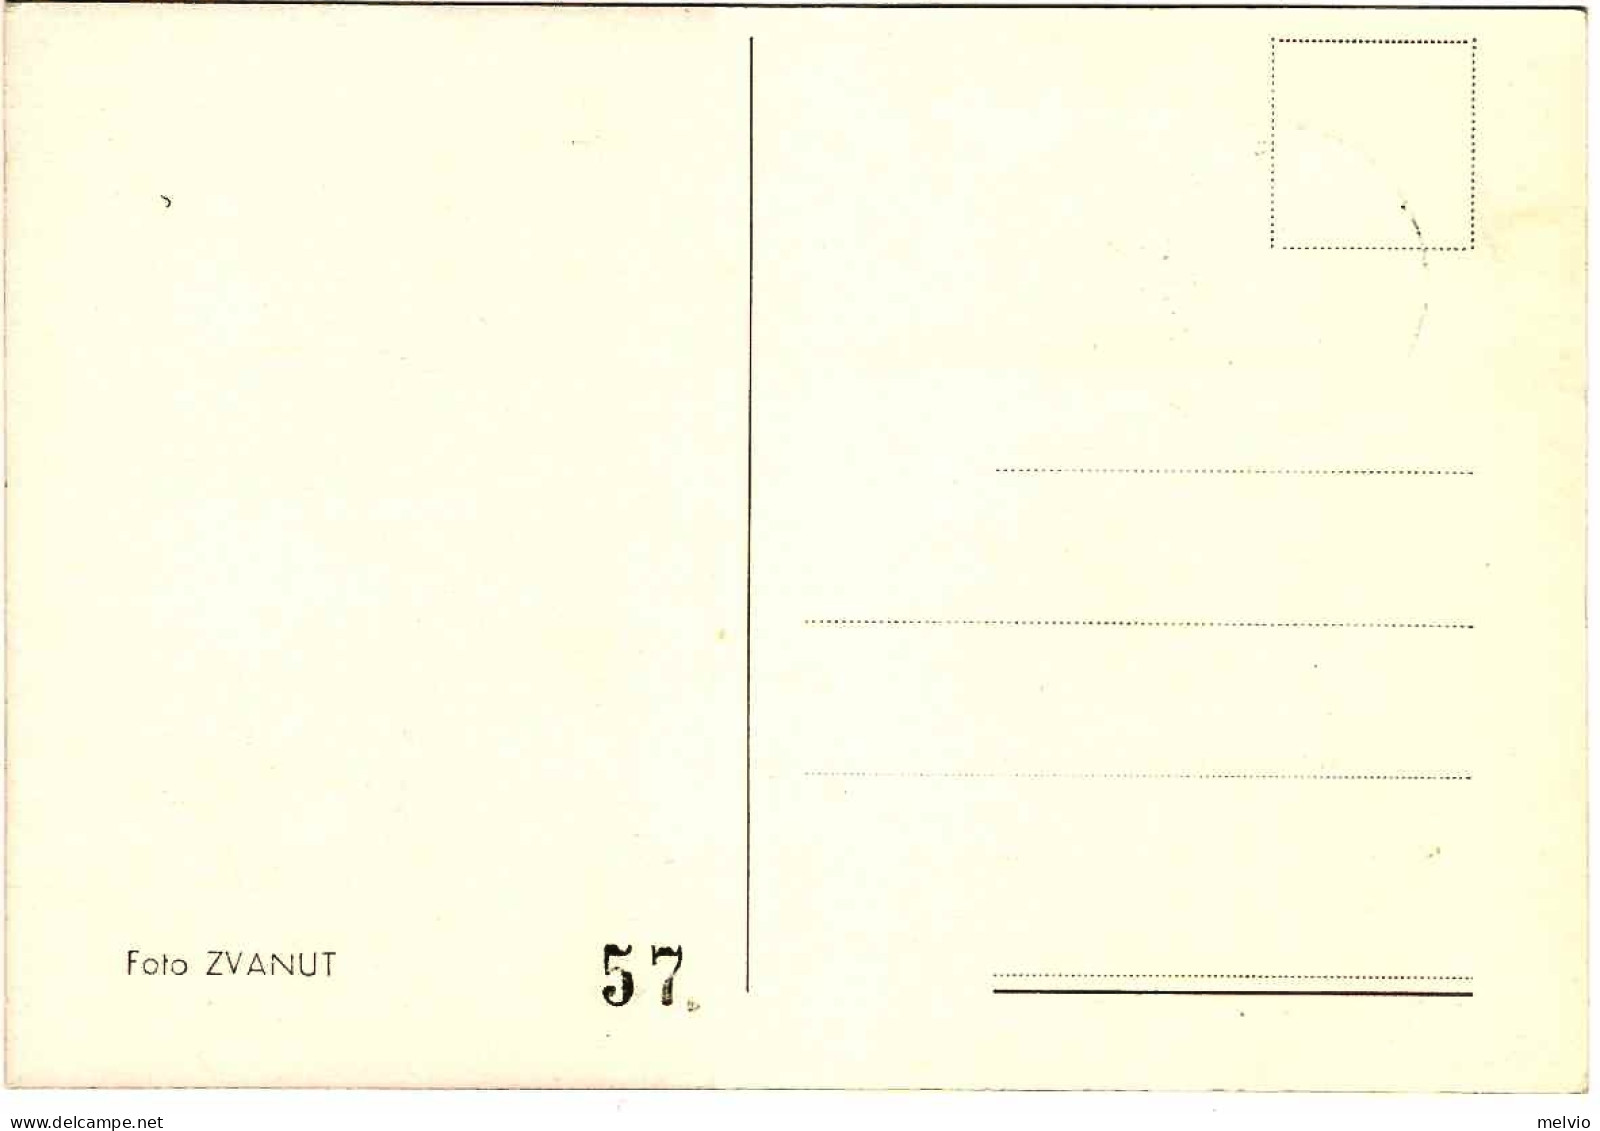 1955-Novara Broletto Cartolina Mostra Filatelica Associazione Sammartinese-affra - Demonstrationen